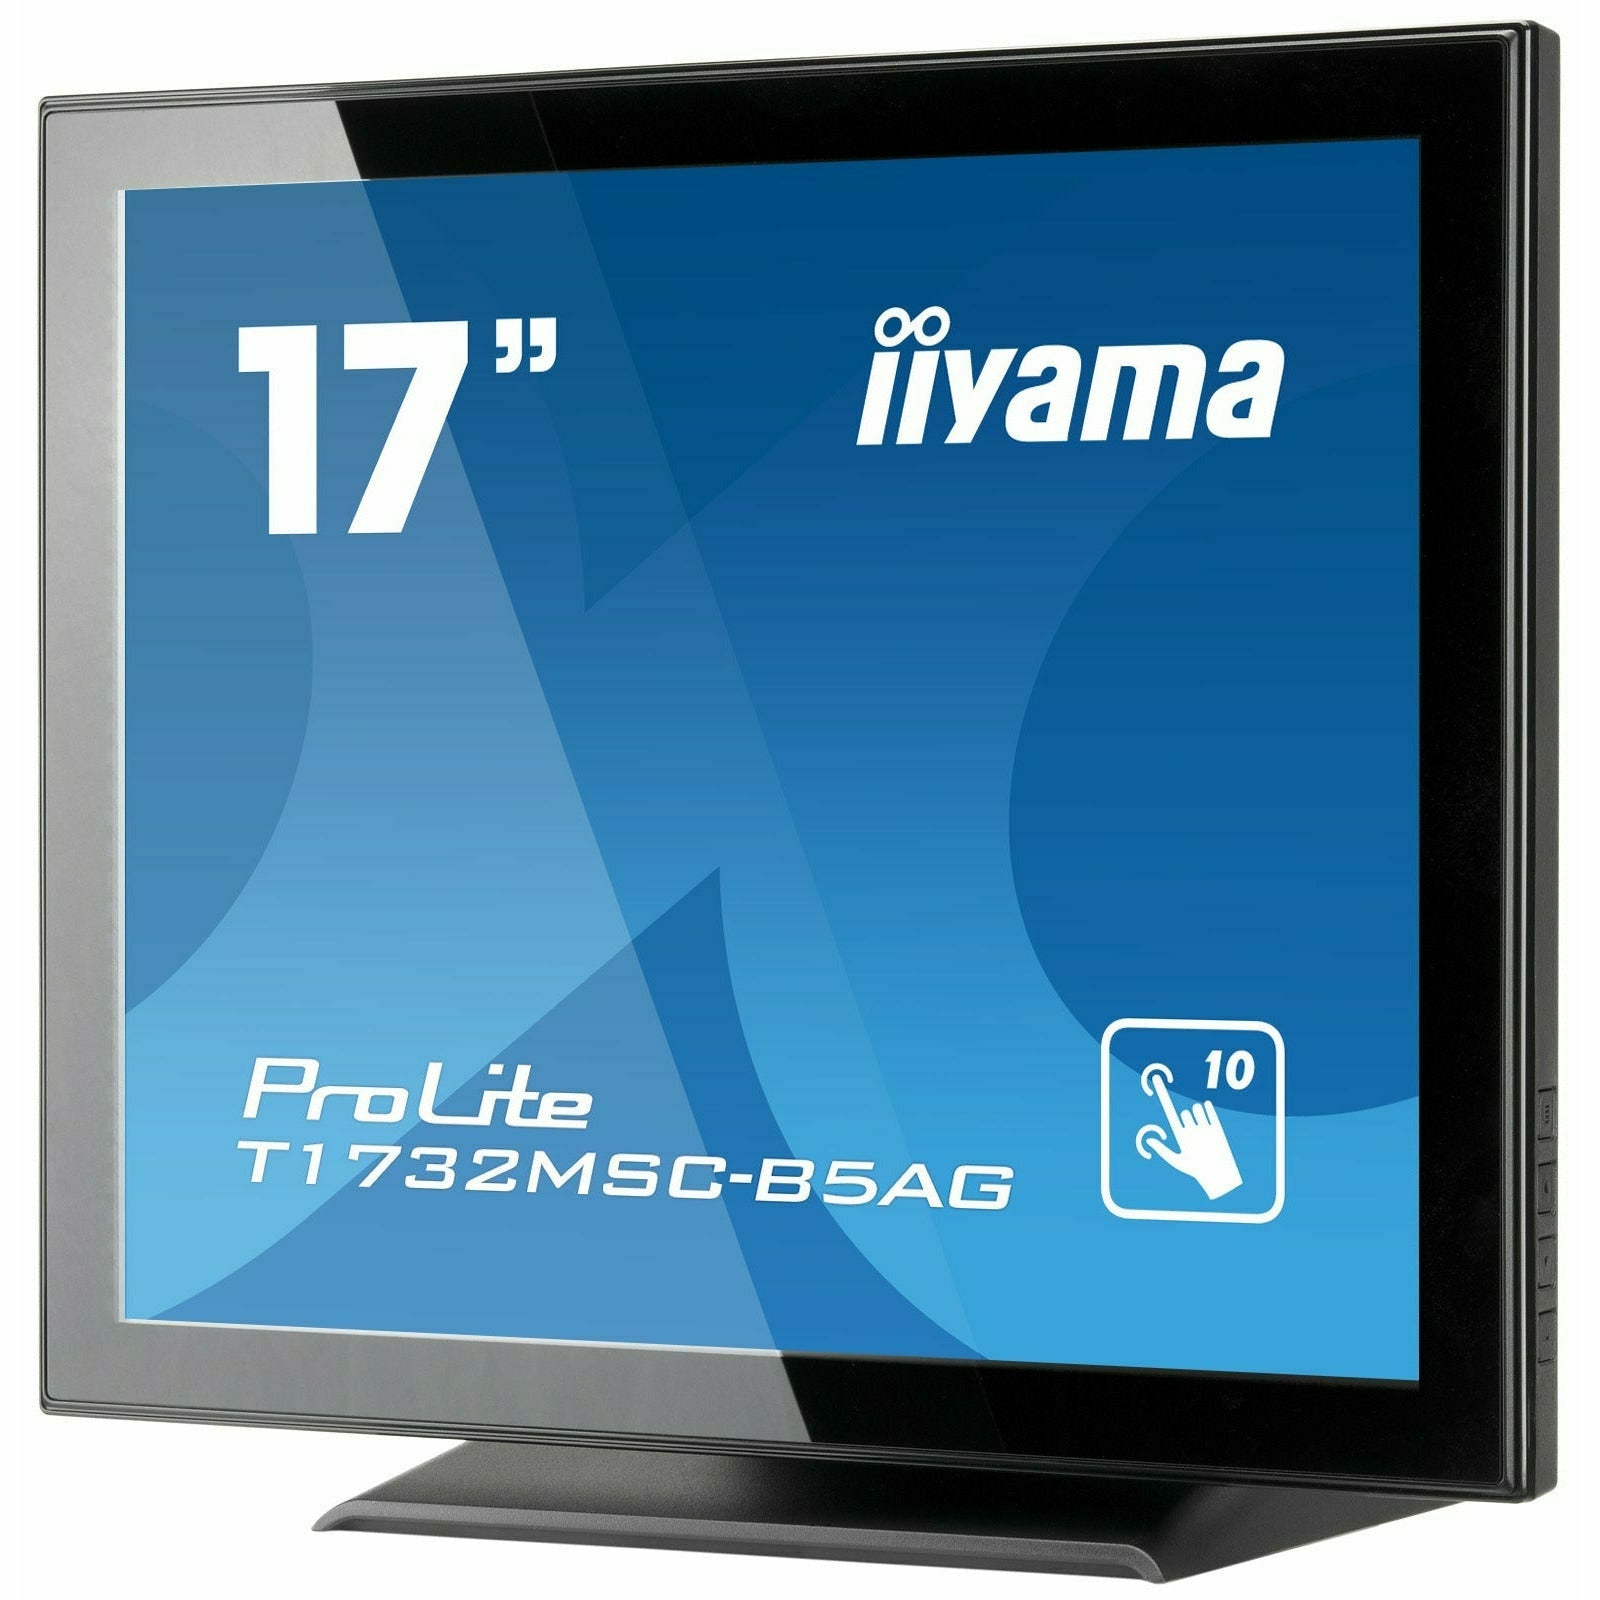 Steel Blue iiyama ProLite T1732MSC-B5AG 17" Professional Capacitive Touch Screen Display